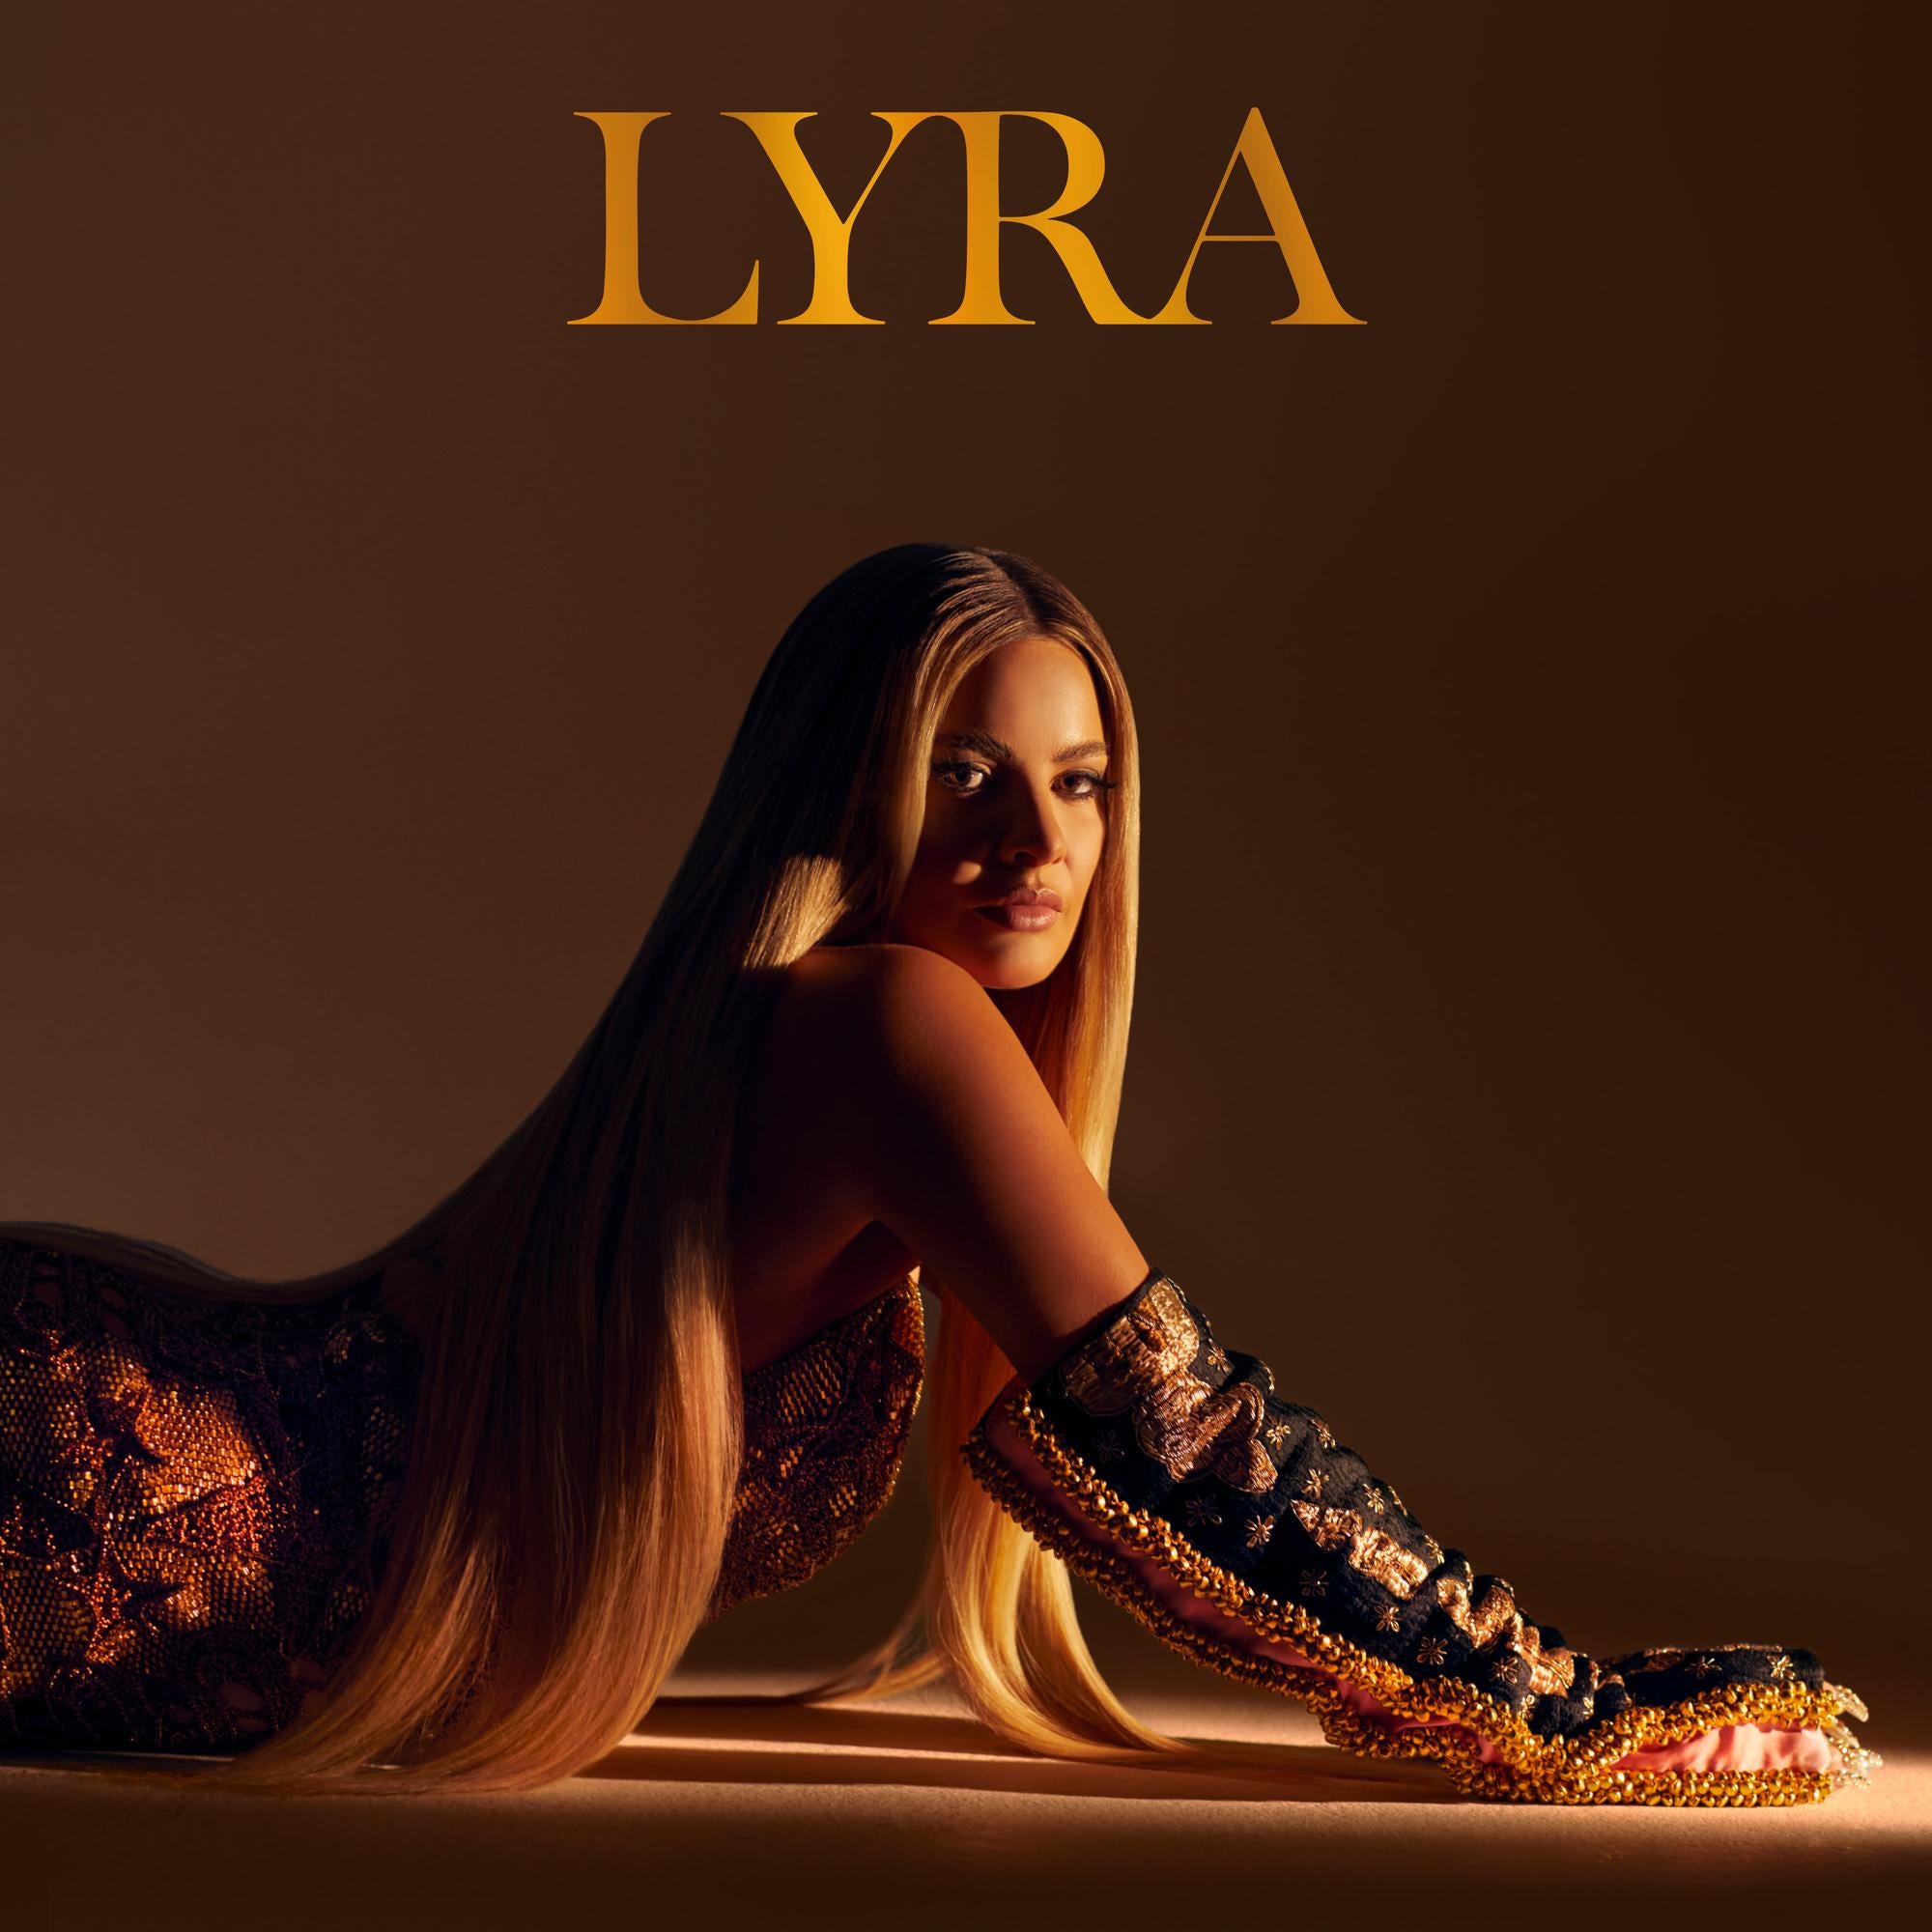 Lyra / 'Lyra' LP LTD Gold Vinyl